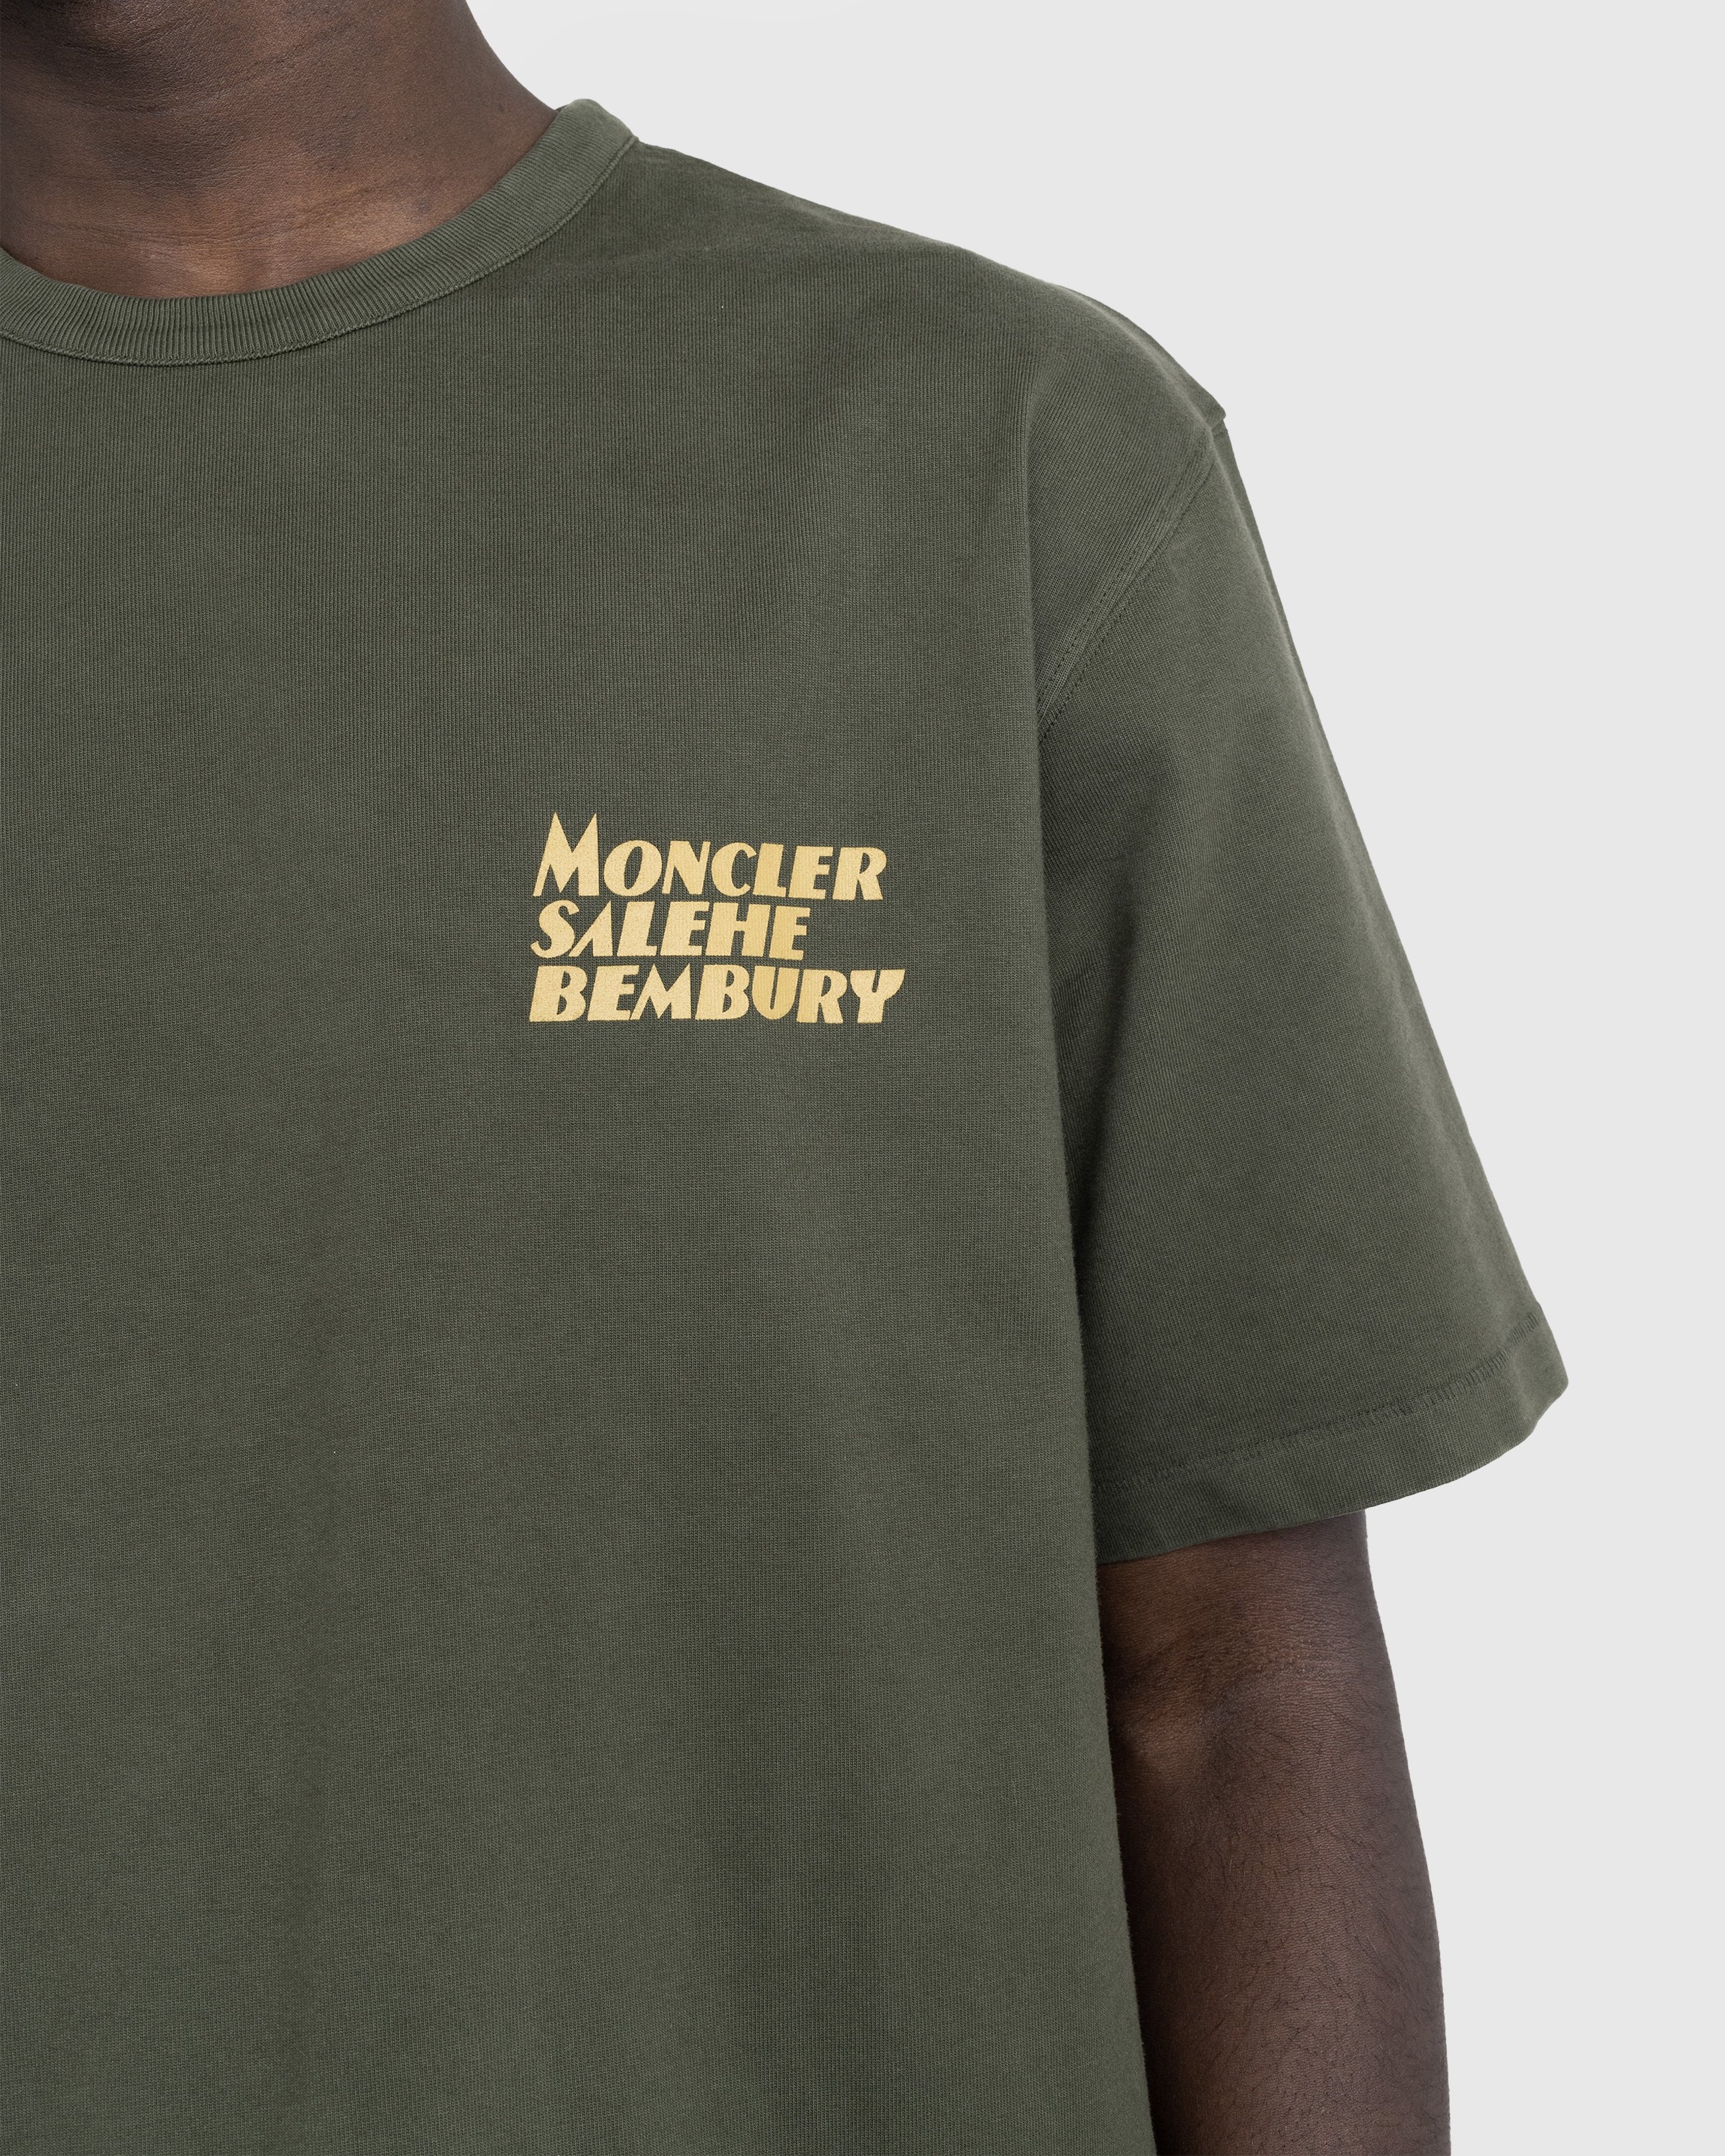 Moncler x Salehe Bembury – Logo T-Shirt Green | Highsnobiety Shop